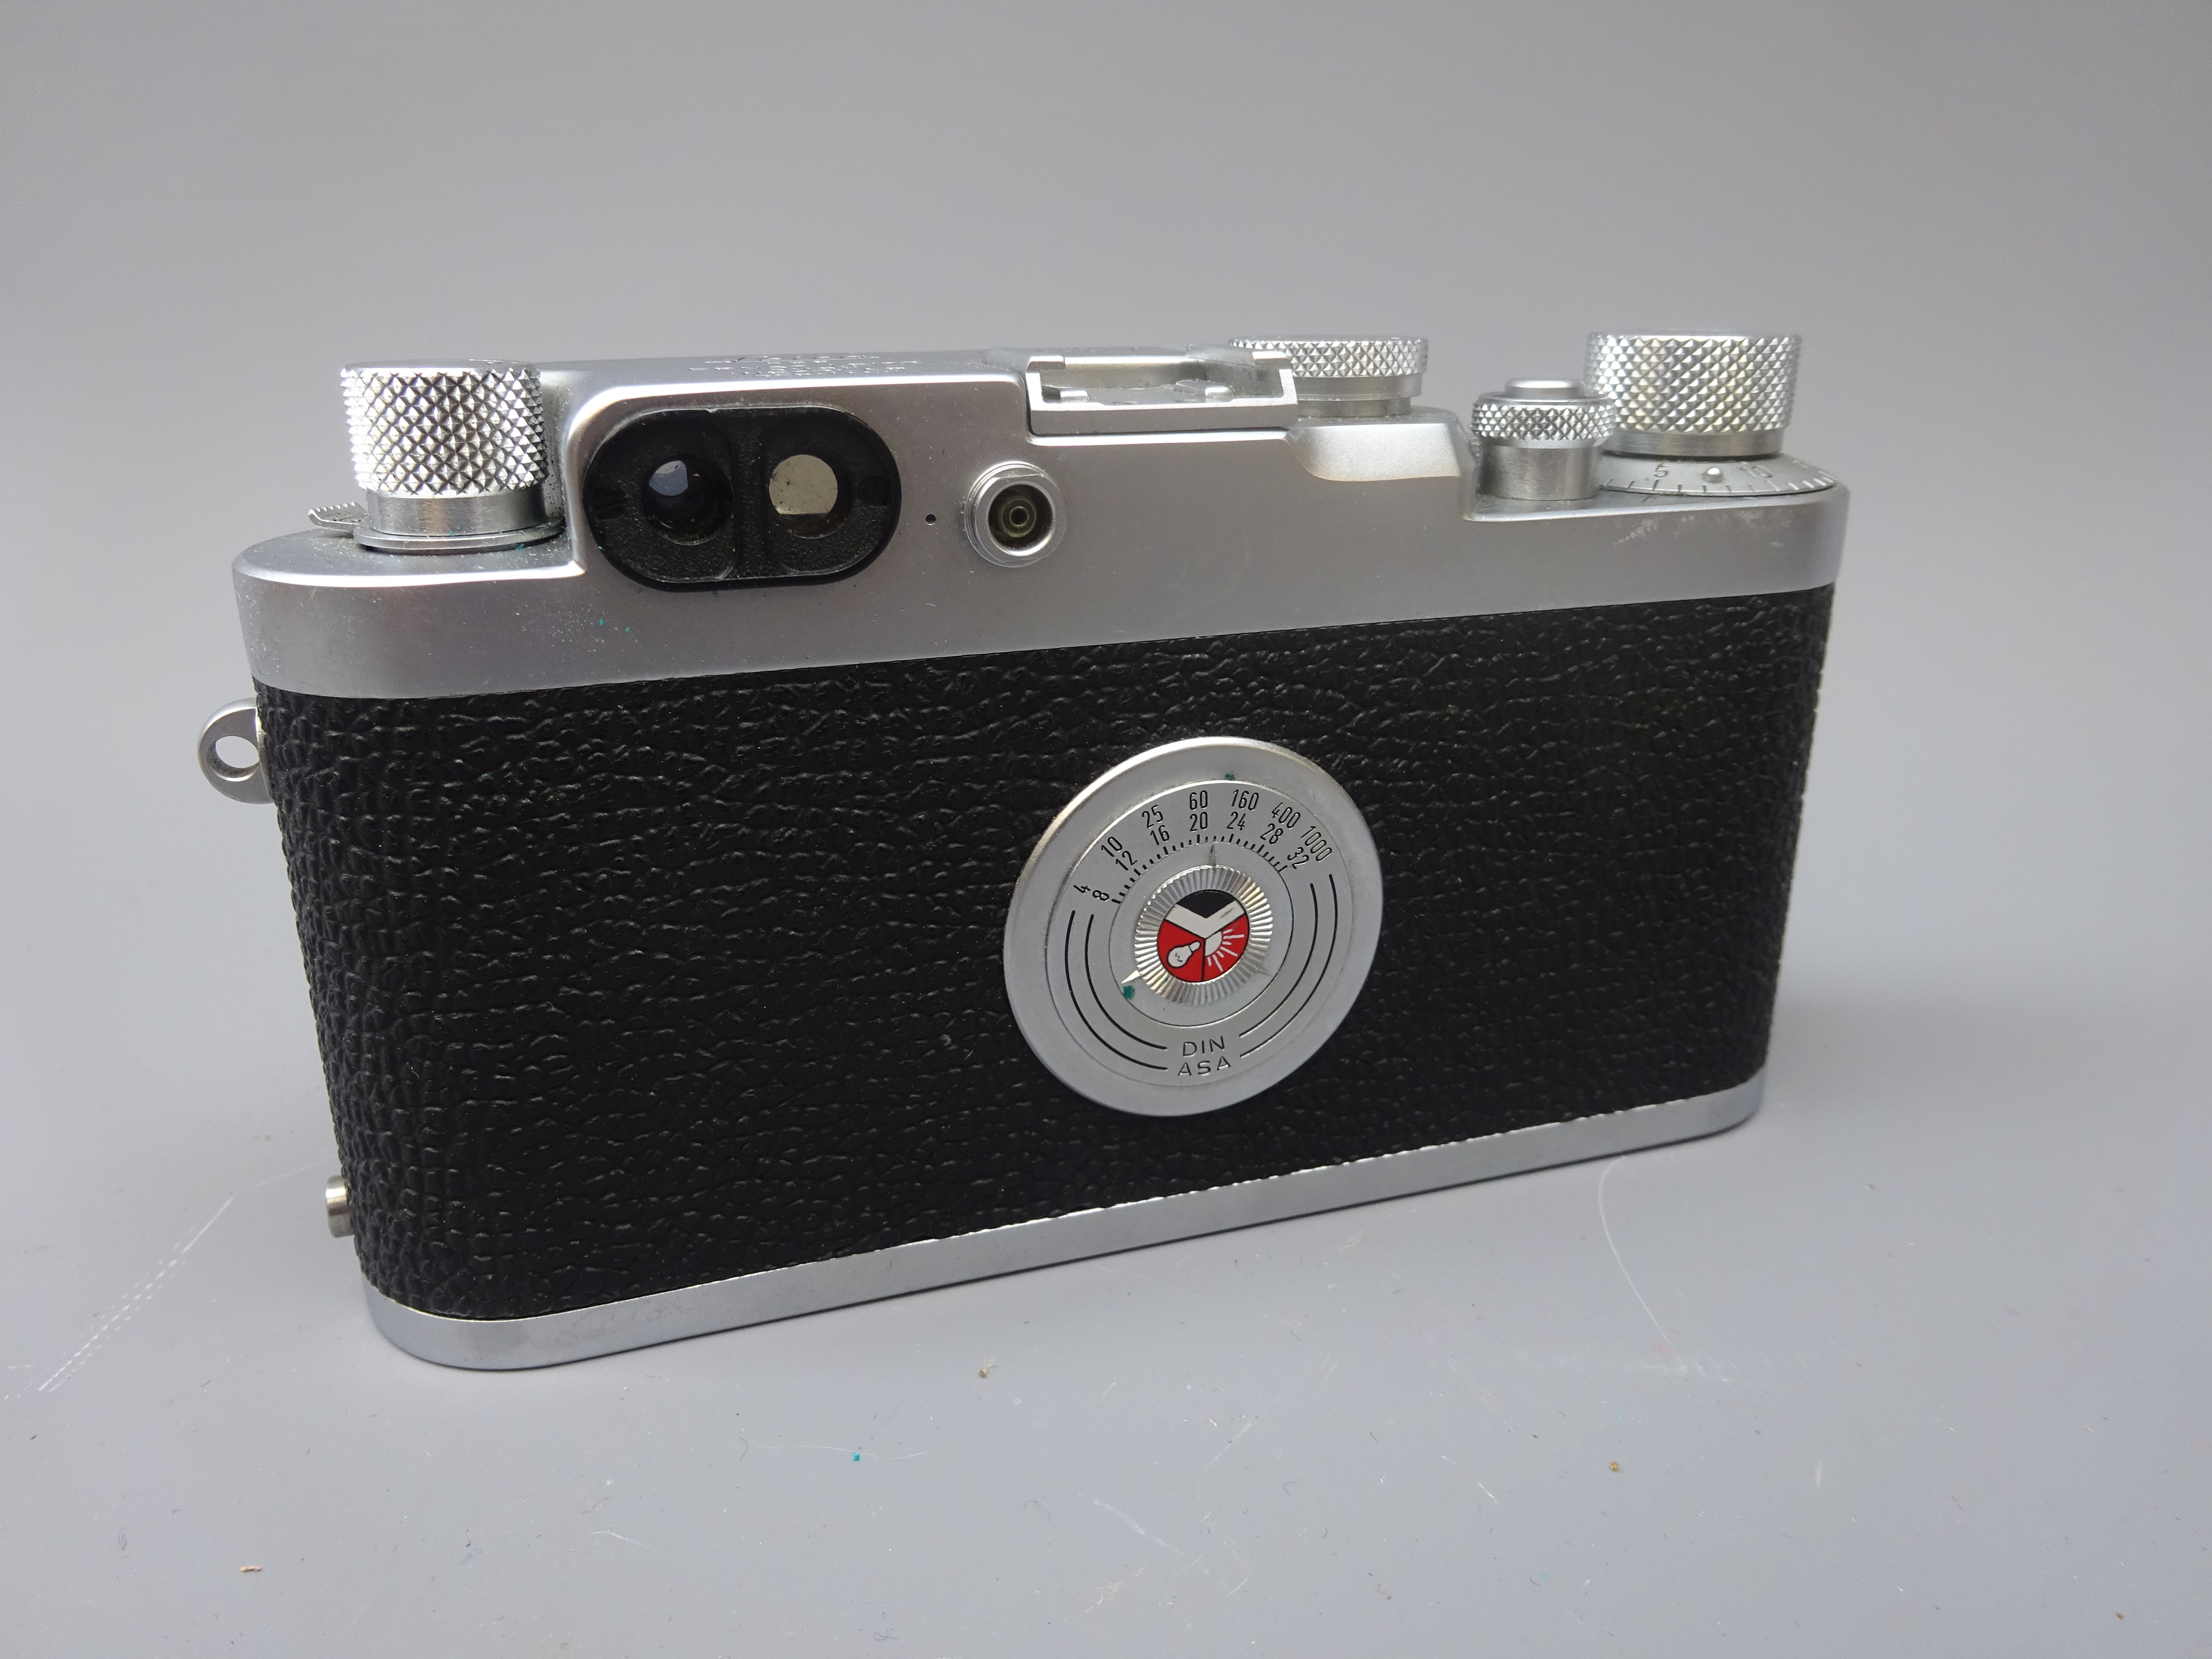 Leica DBP 35mm film camera, Ernst Leitz Wetzlar GMBH Germany Nr. - Image 2 of 7